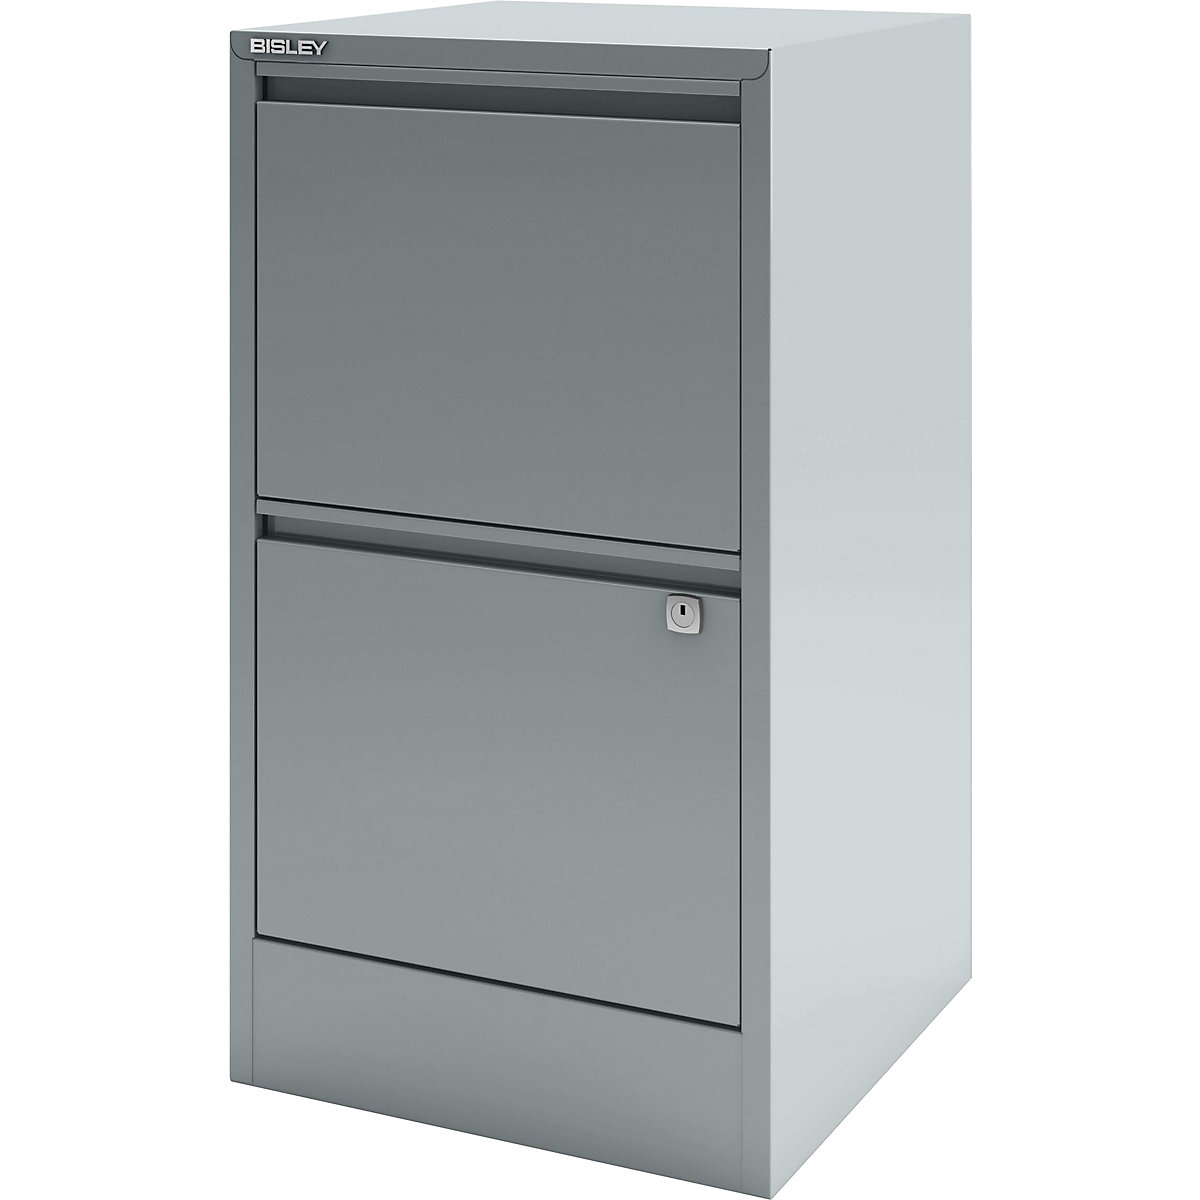 HomeFiler suspension filing cabinet – BISLEY, 2 suspension file drawers, silver-5